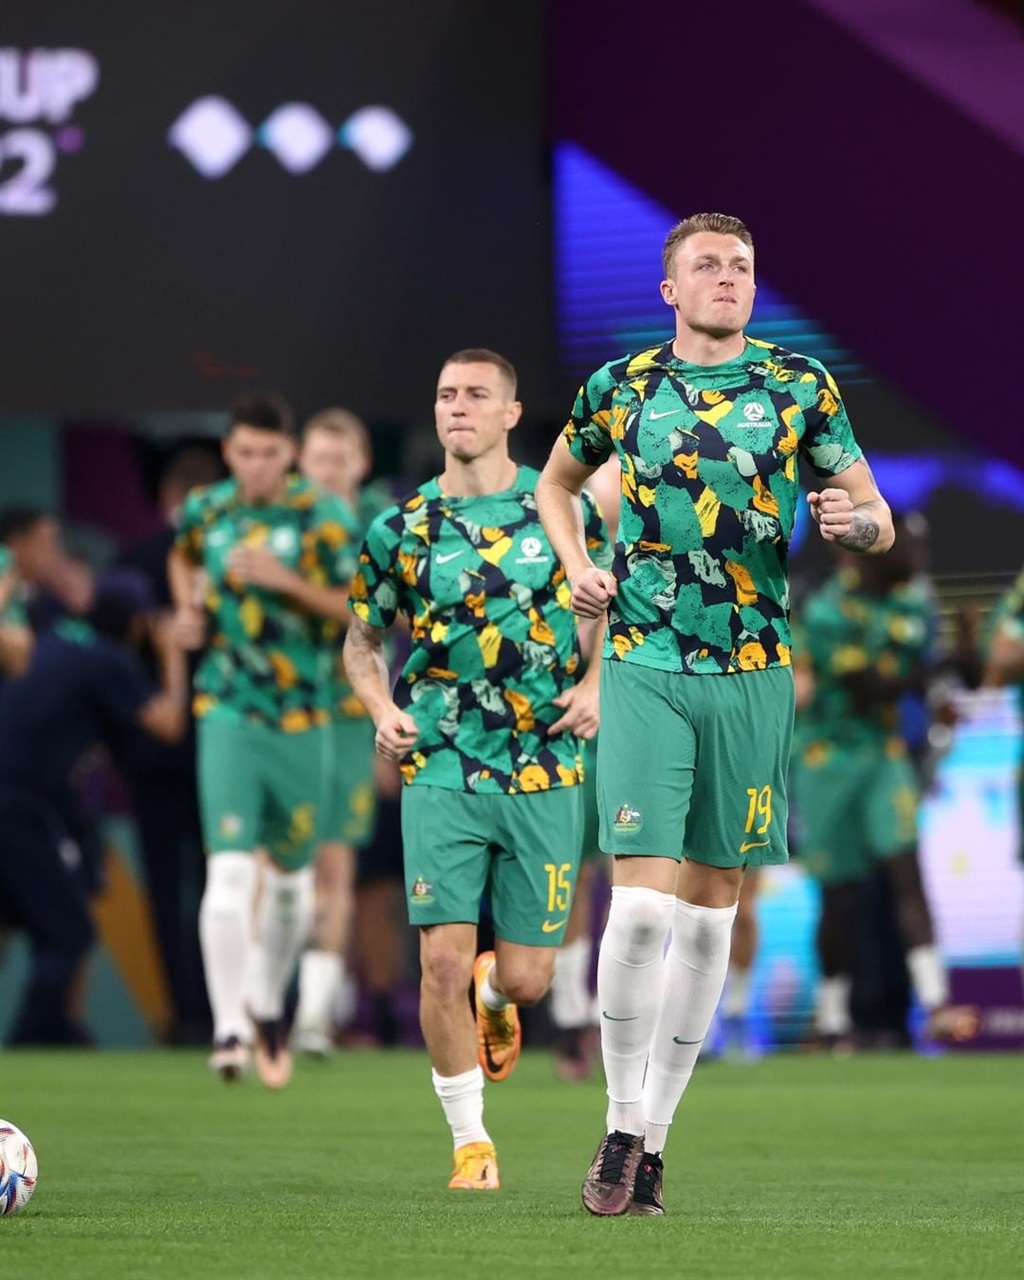 Australia in their World Cup warm-up jerseys